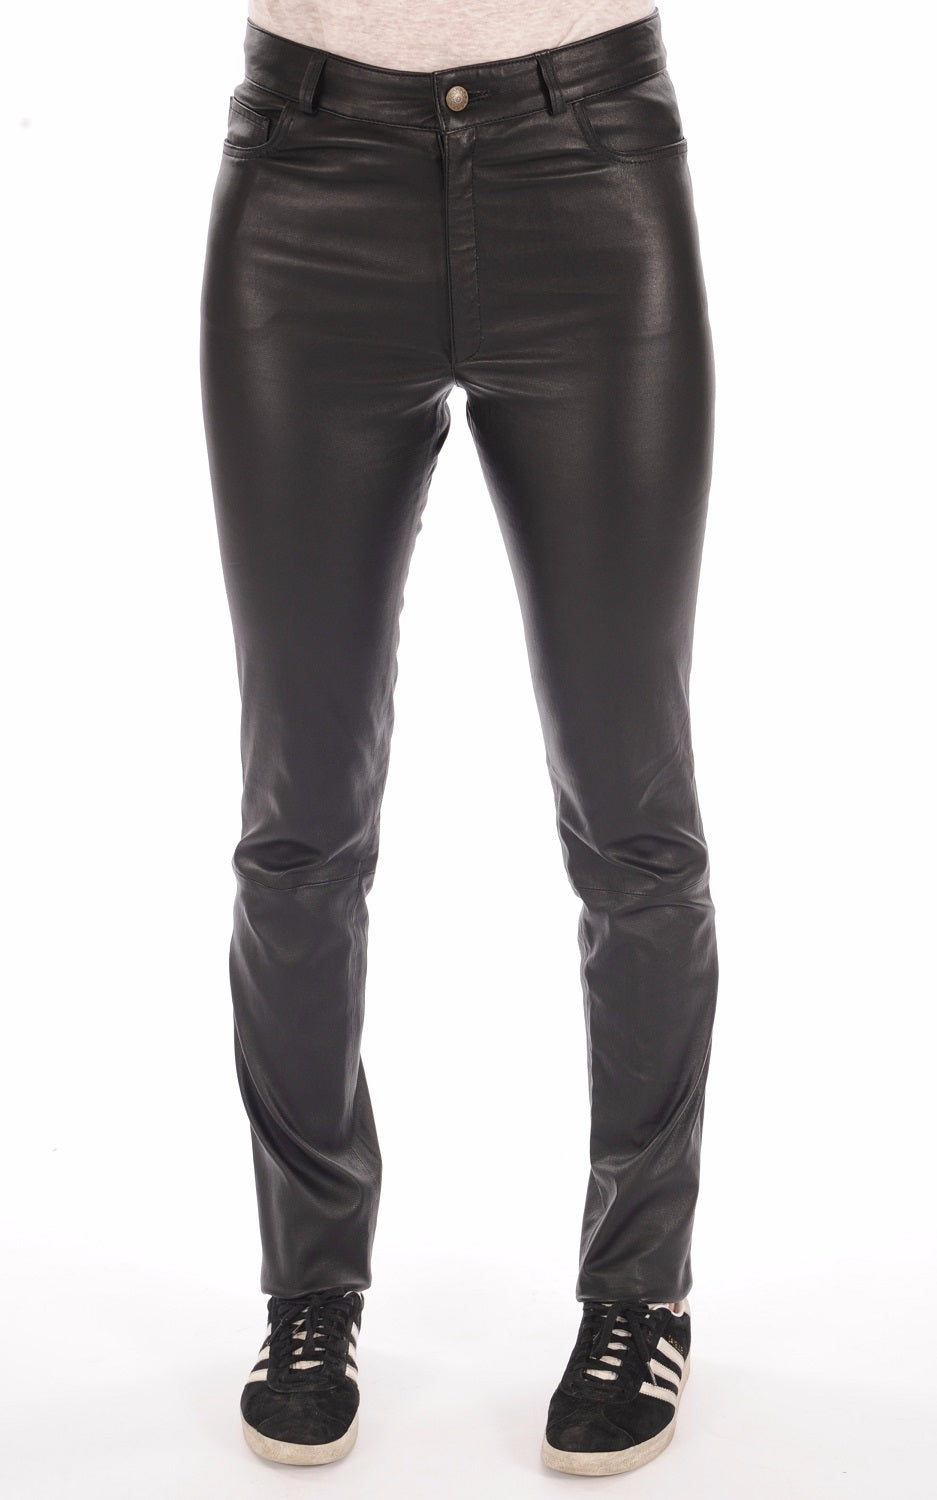 Women Genuine Leather Pant WP 10 SkinOutfit